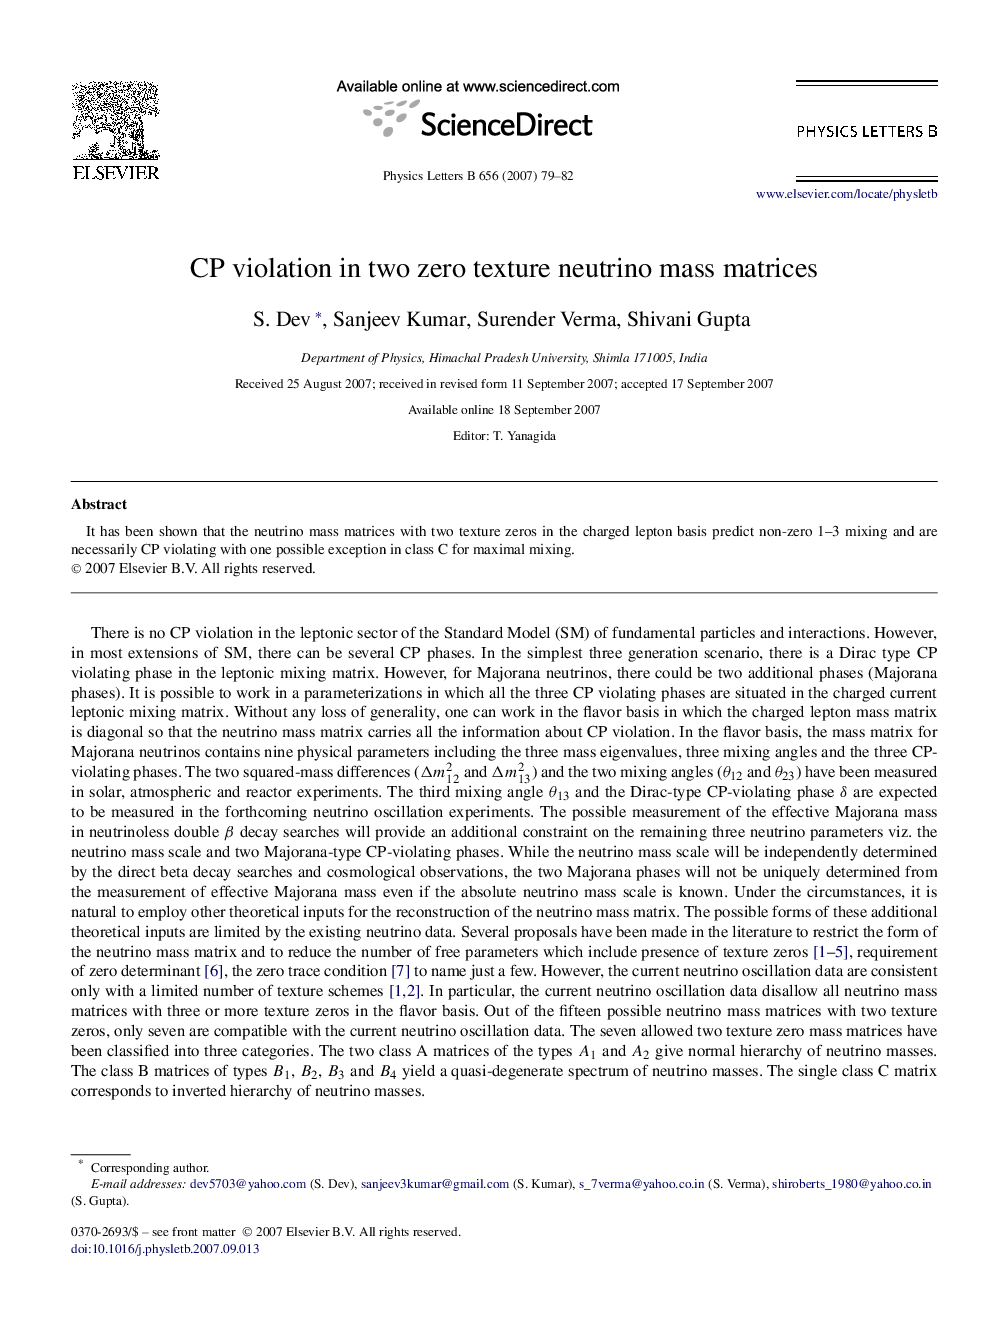 CP violation in two zero texture neutrino mass matrices